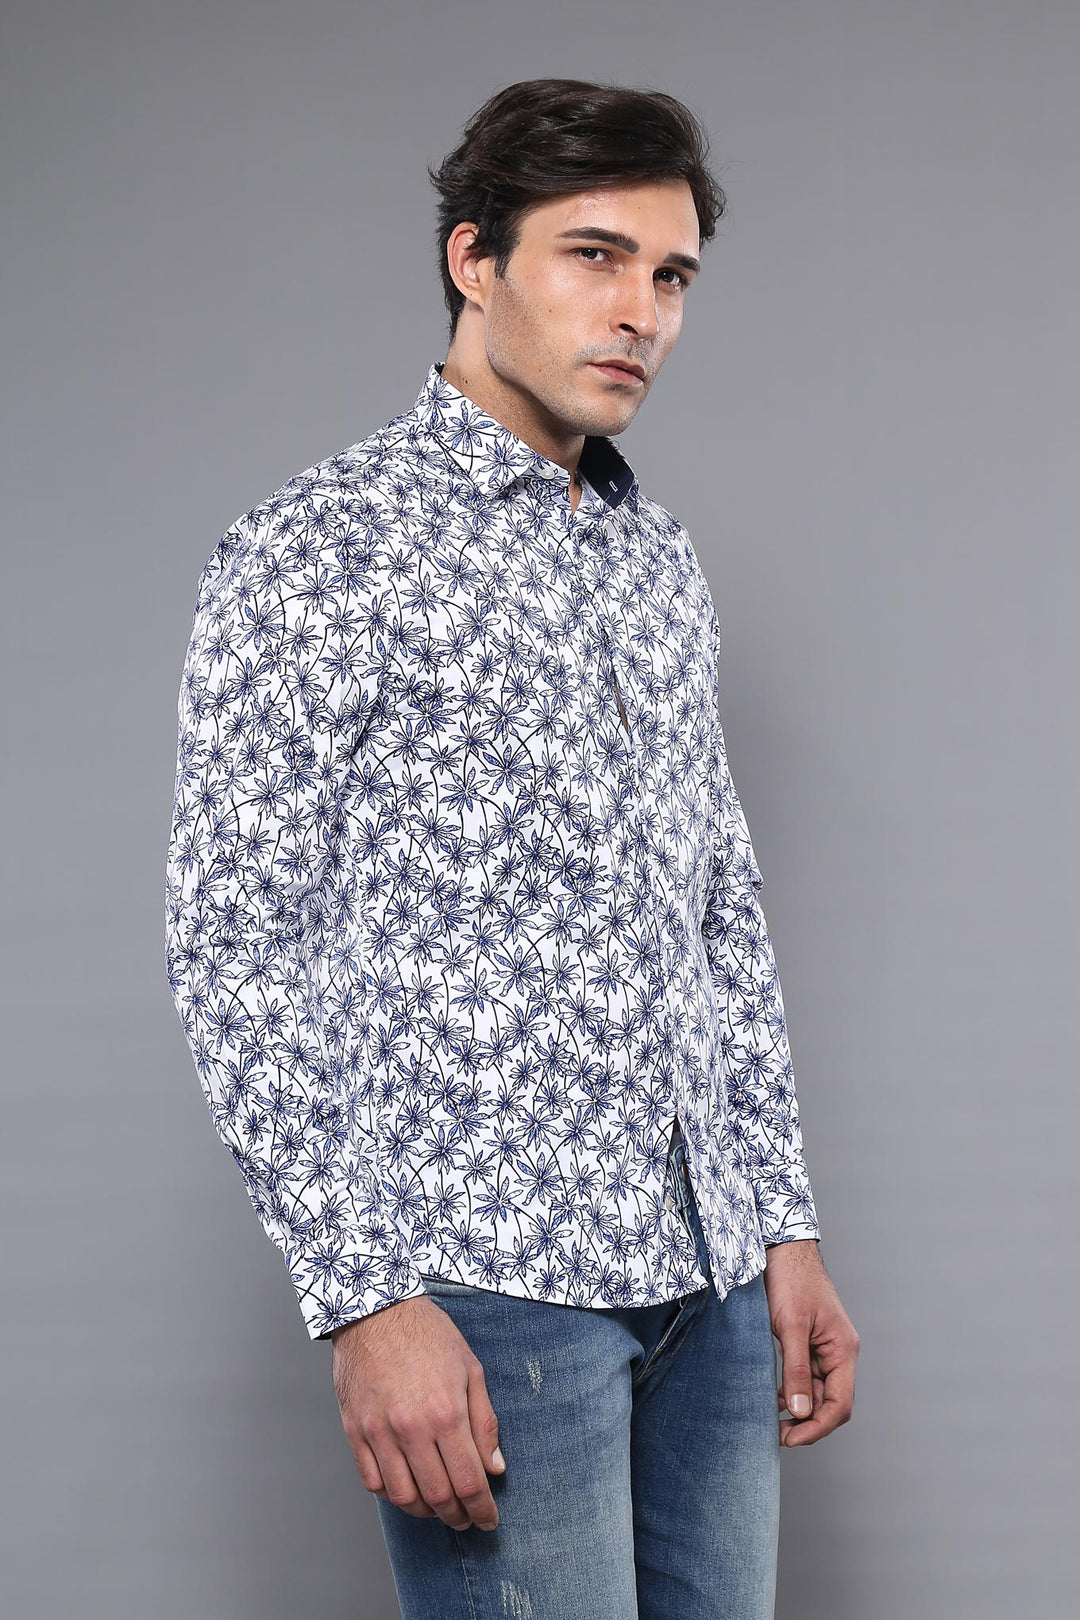 Blue Floral Patterned Long Sleeve White Men Shirt - Wessi